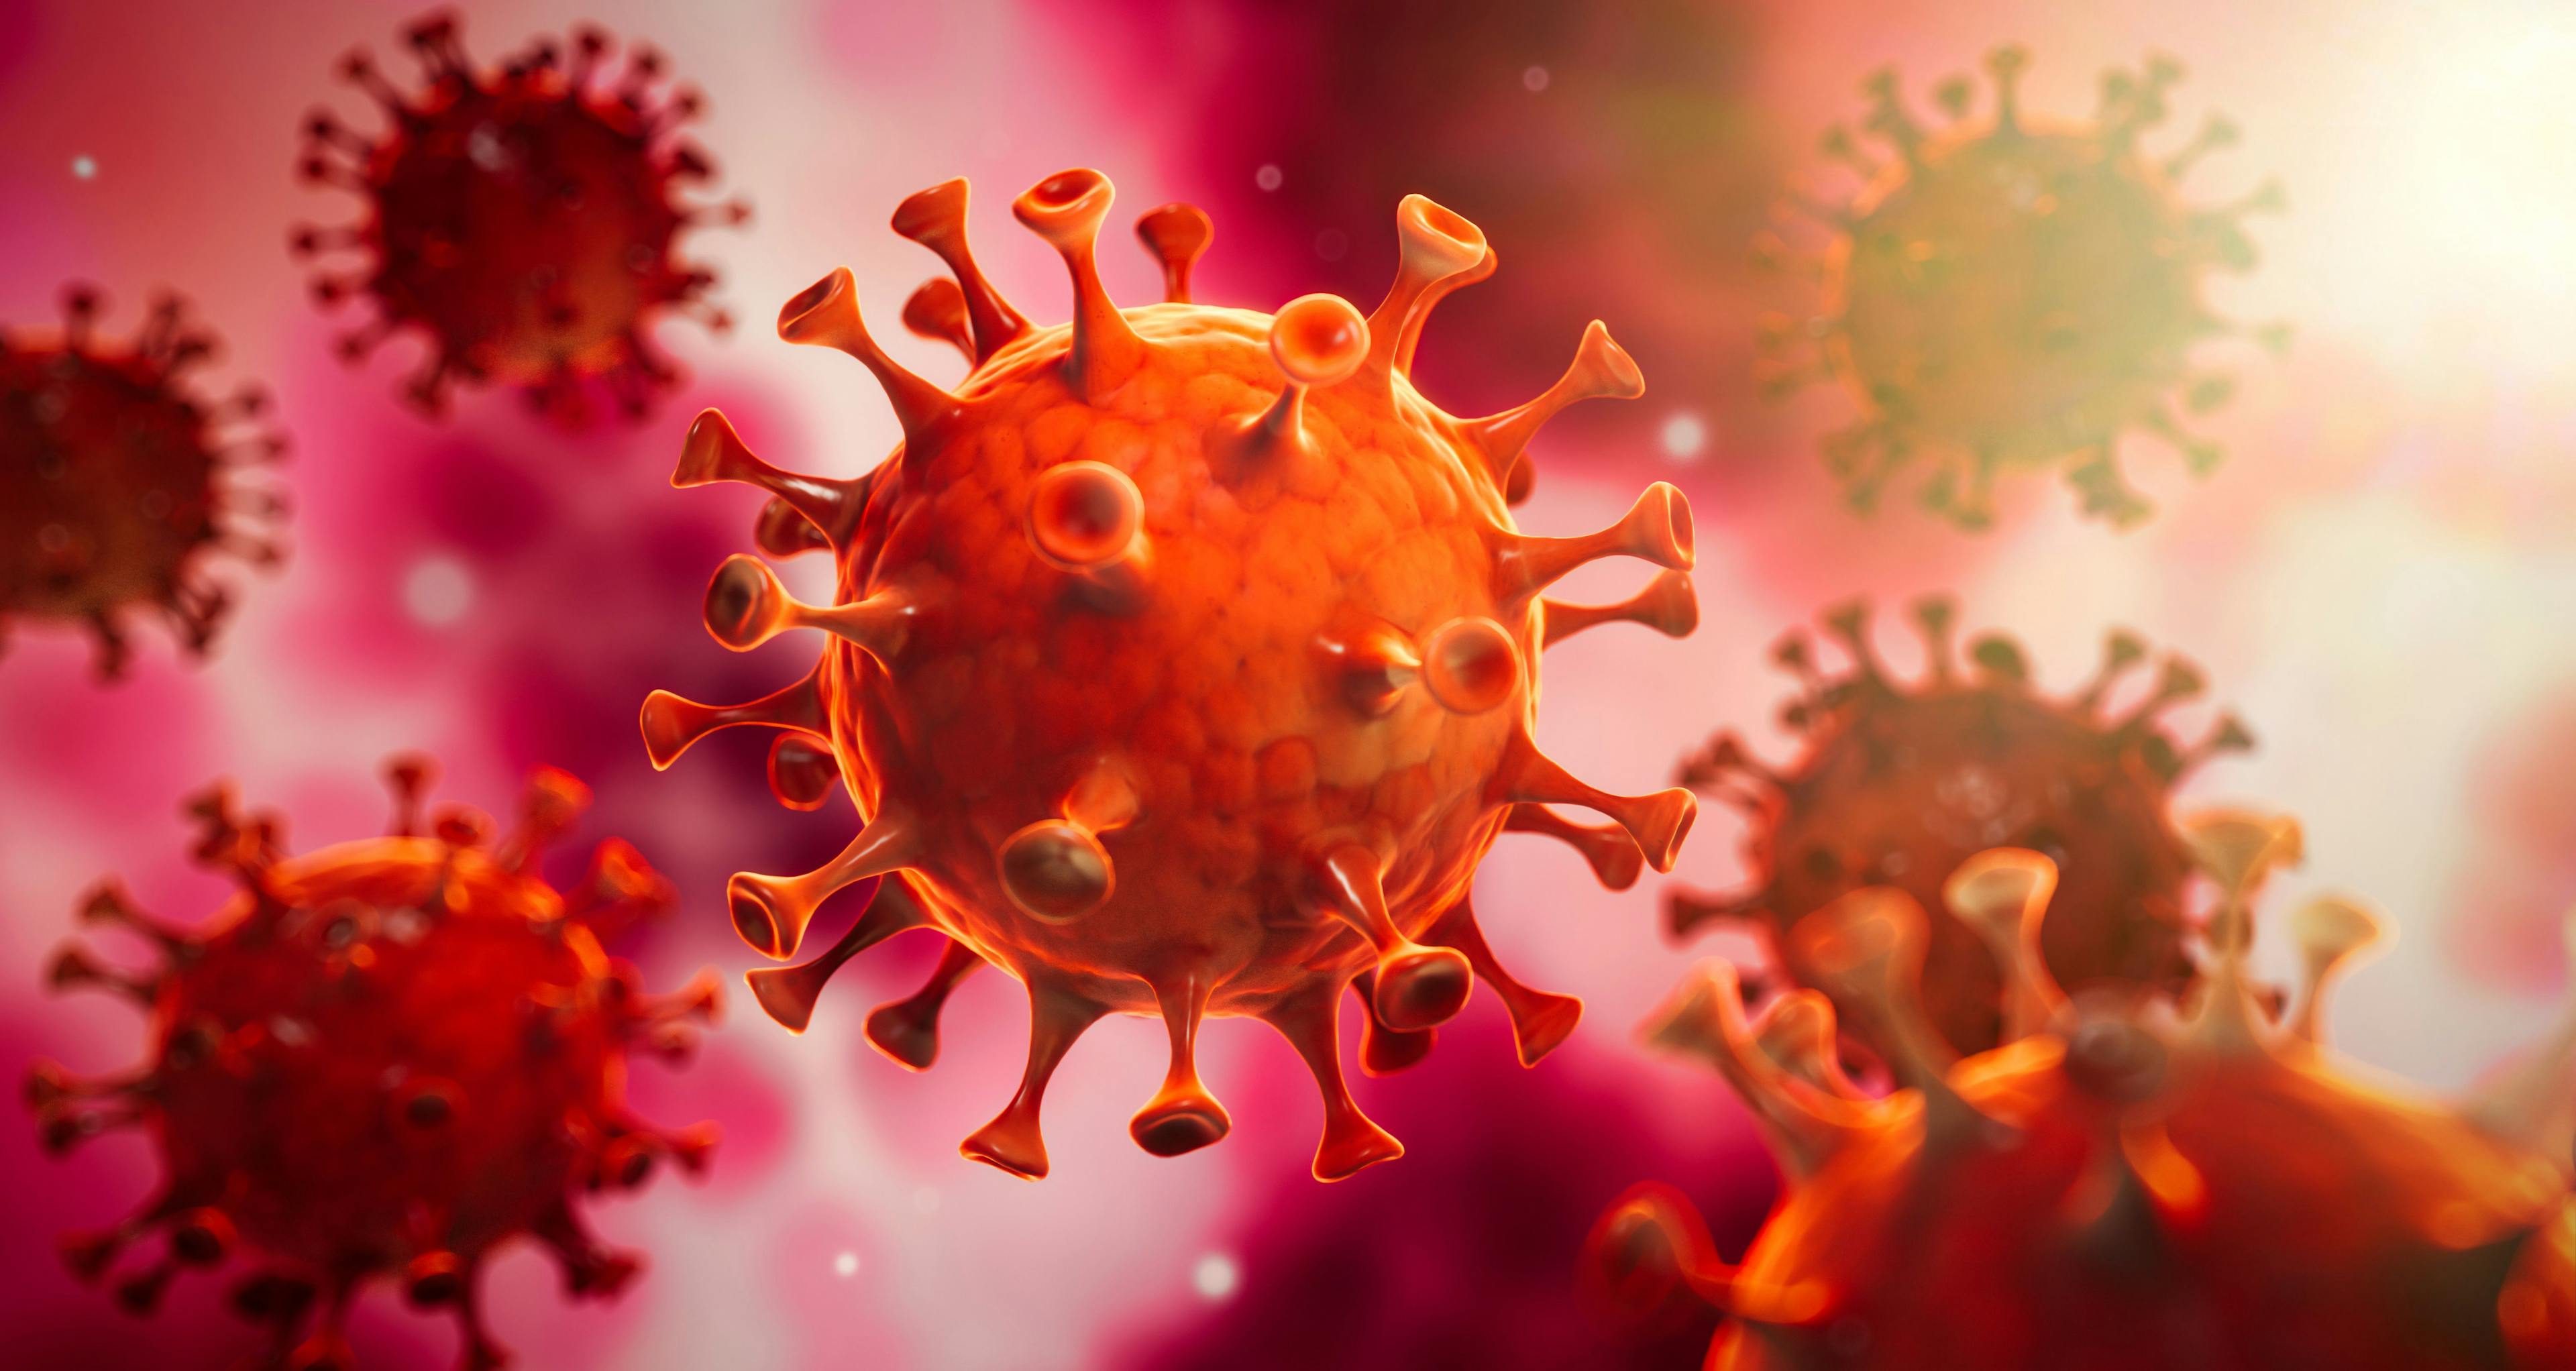 Coronavirus | Image Credit: peterschreiber.media - stock.adobe.com